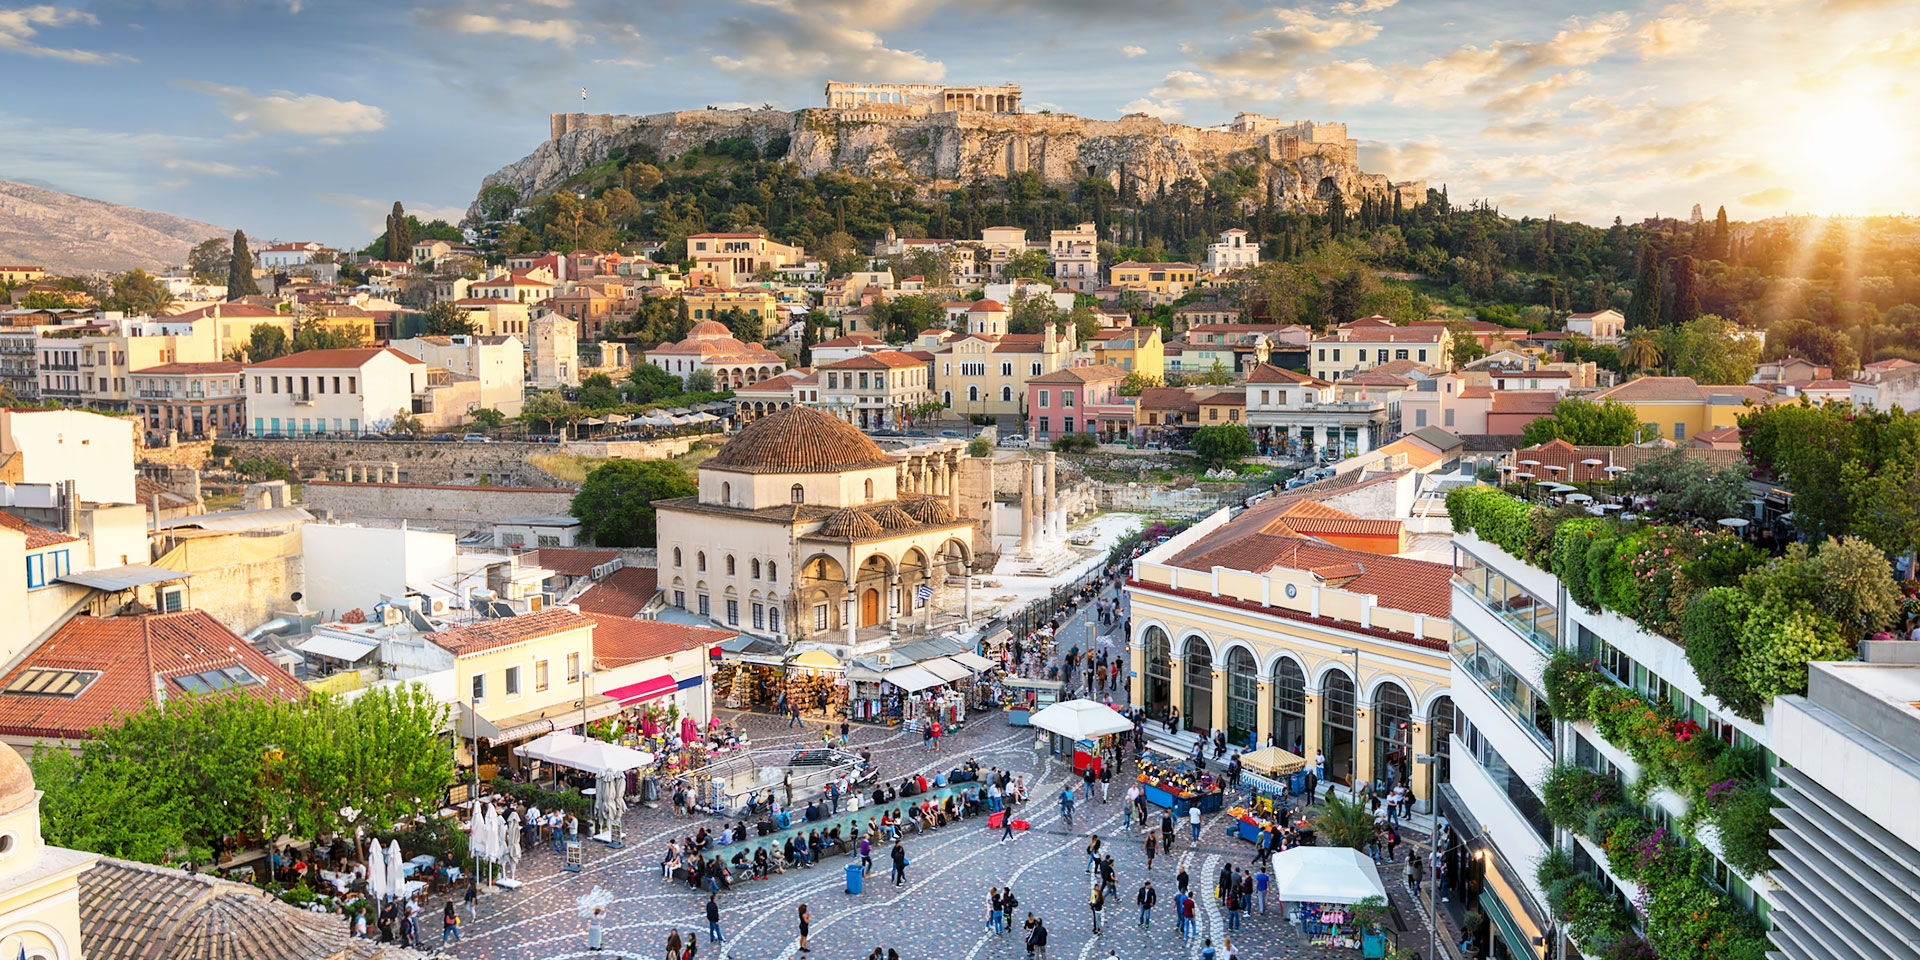 Day 21 Kalbaka – Drop off in Athens or Corfu 